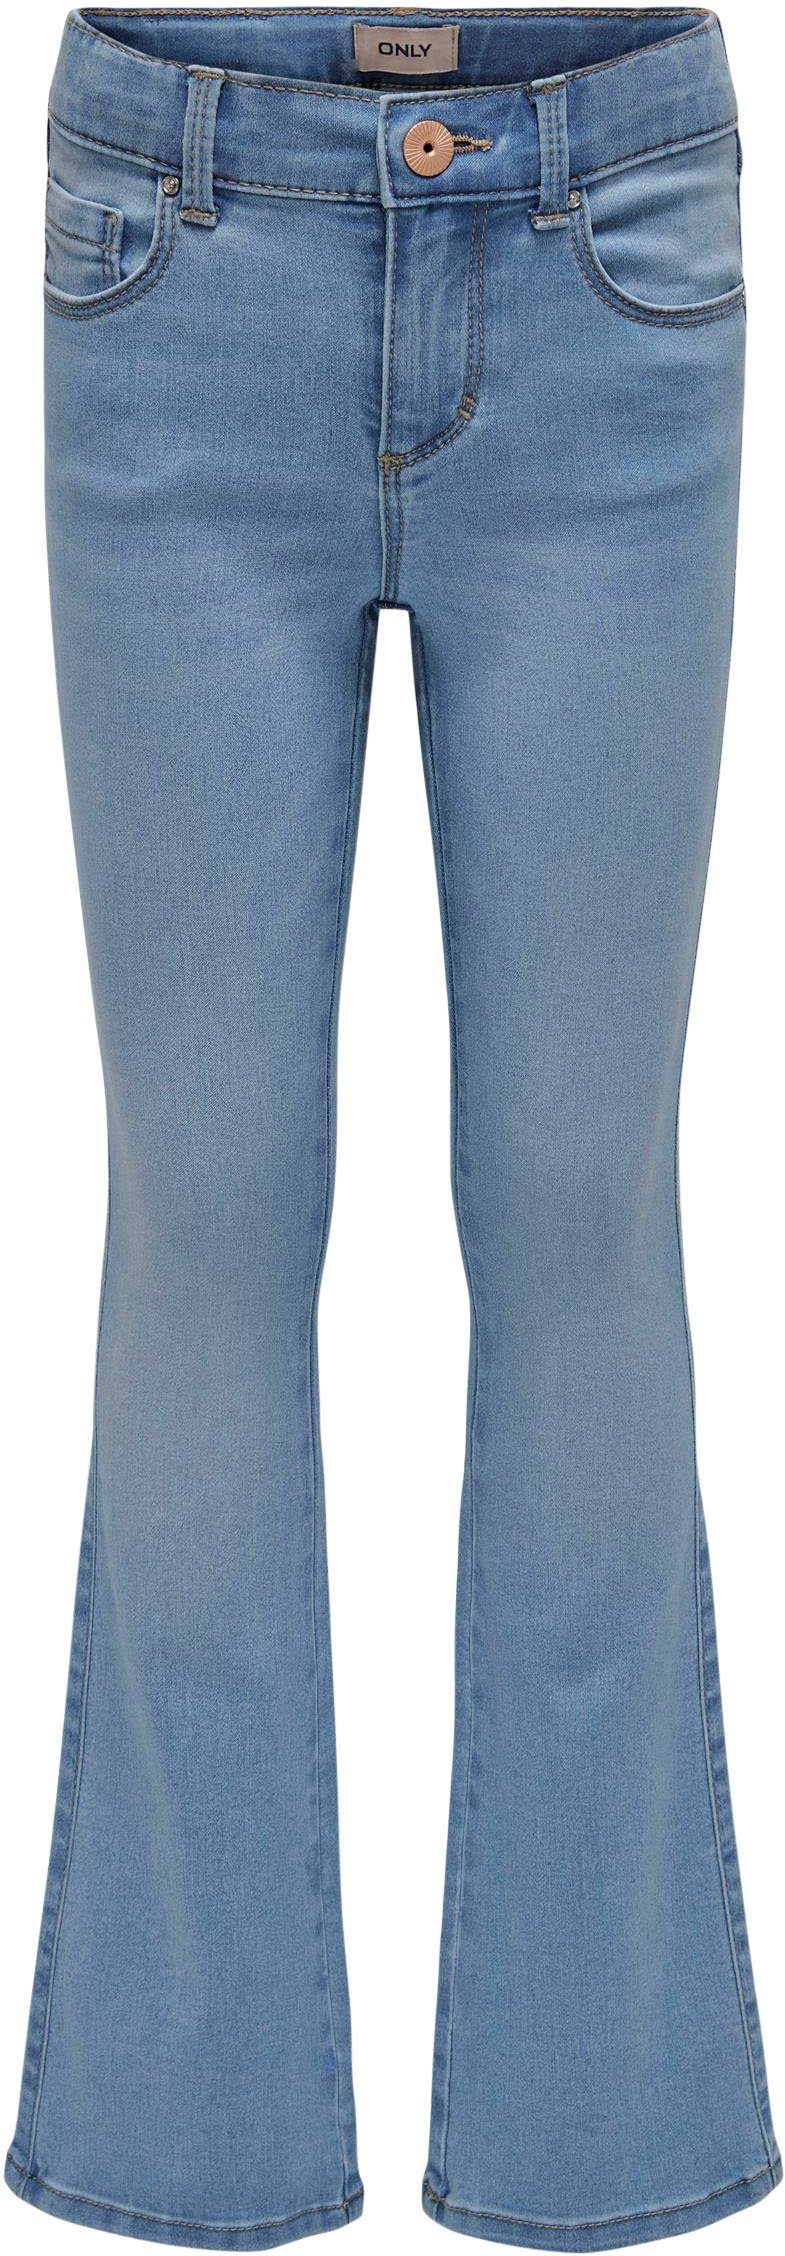 NOOS FLARED Bootcut-Jeans REG PIM020 ONLY LIFE KIDS KOGROYAL